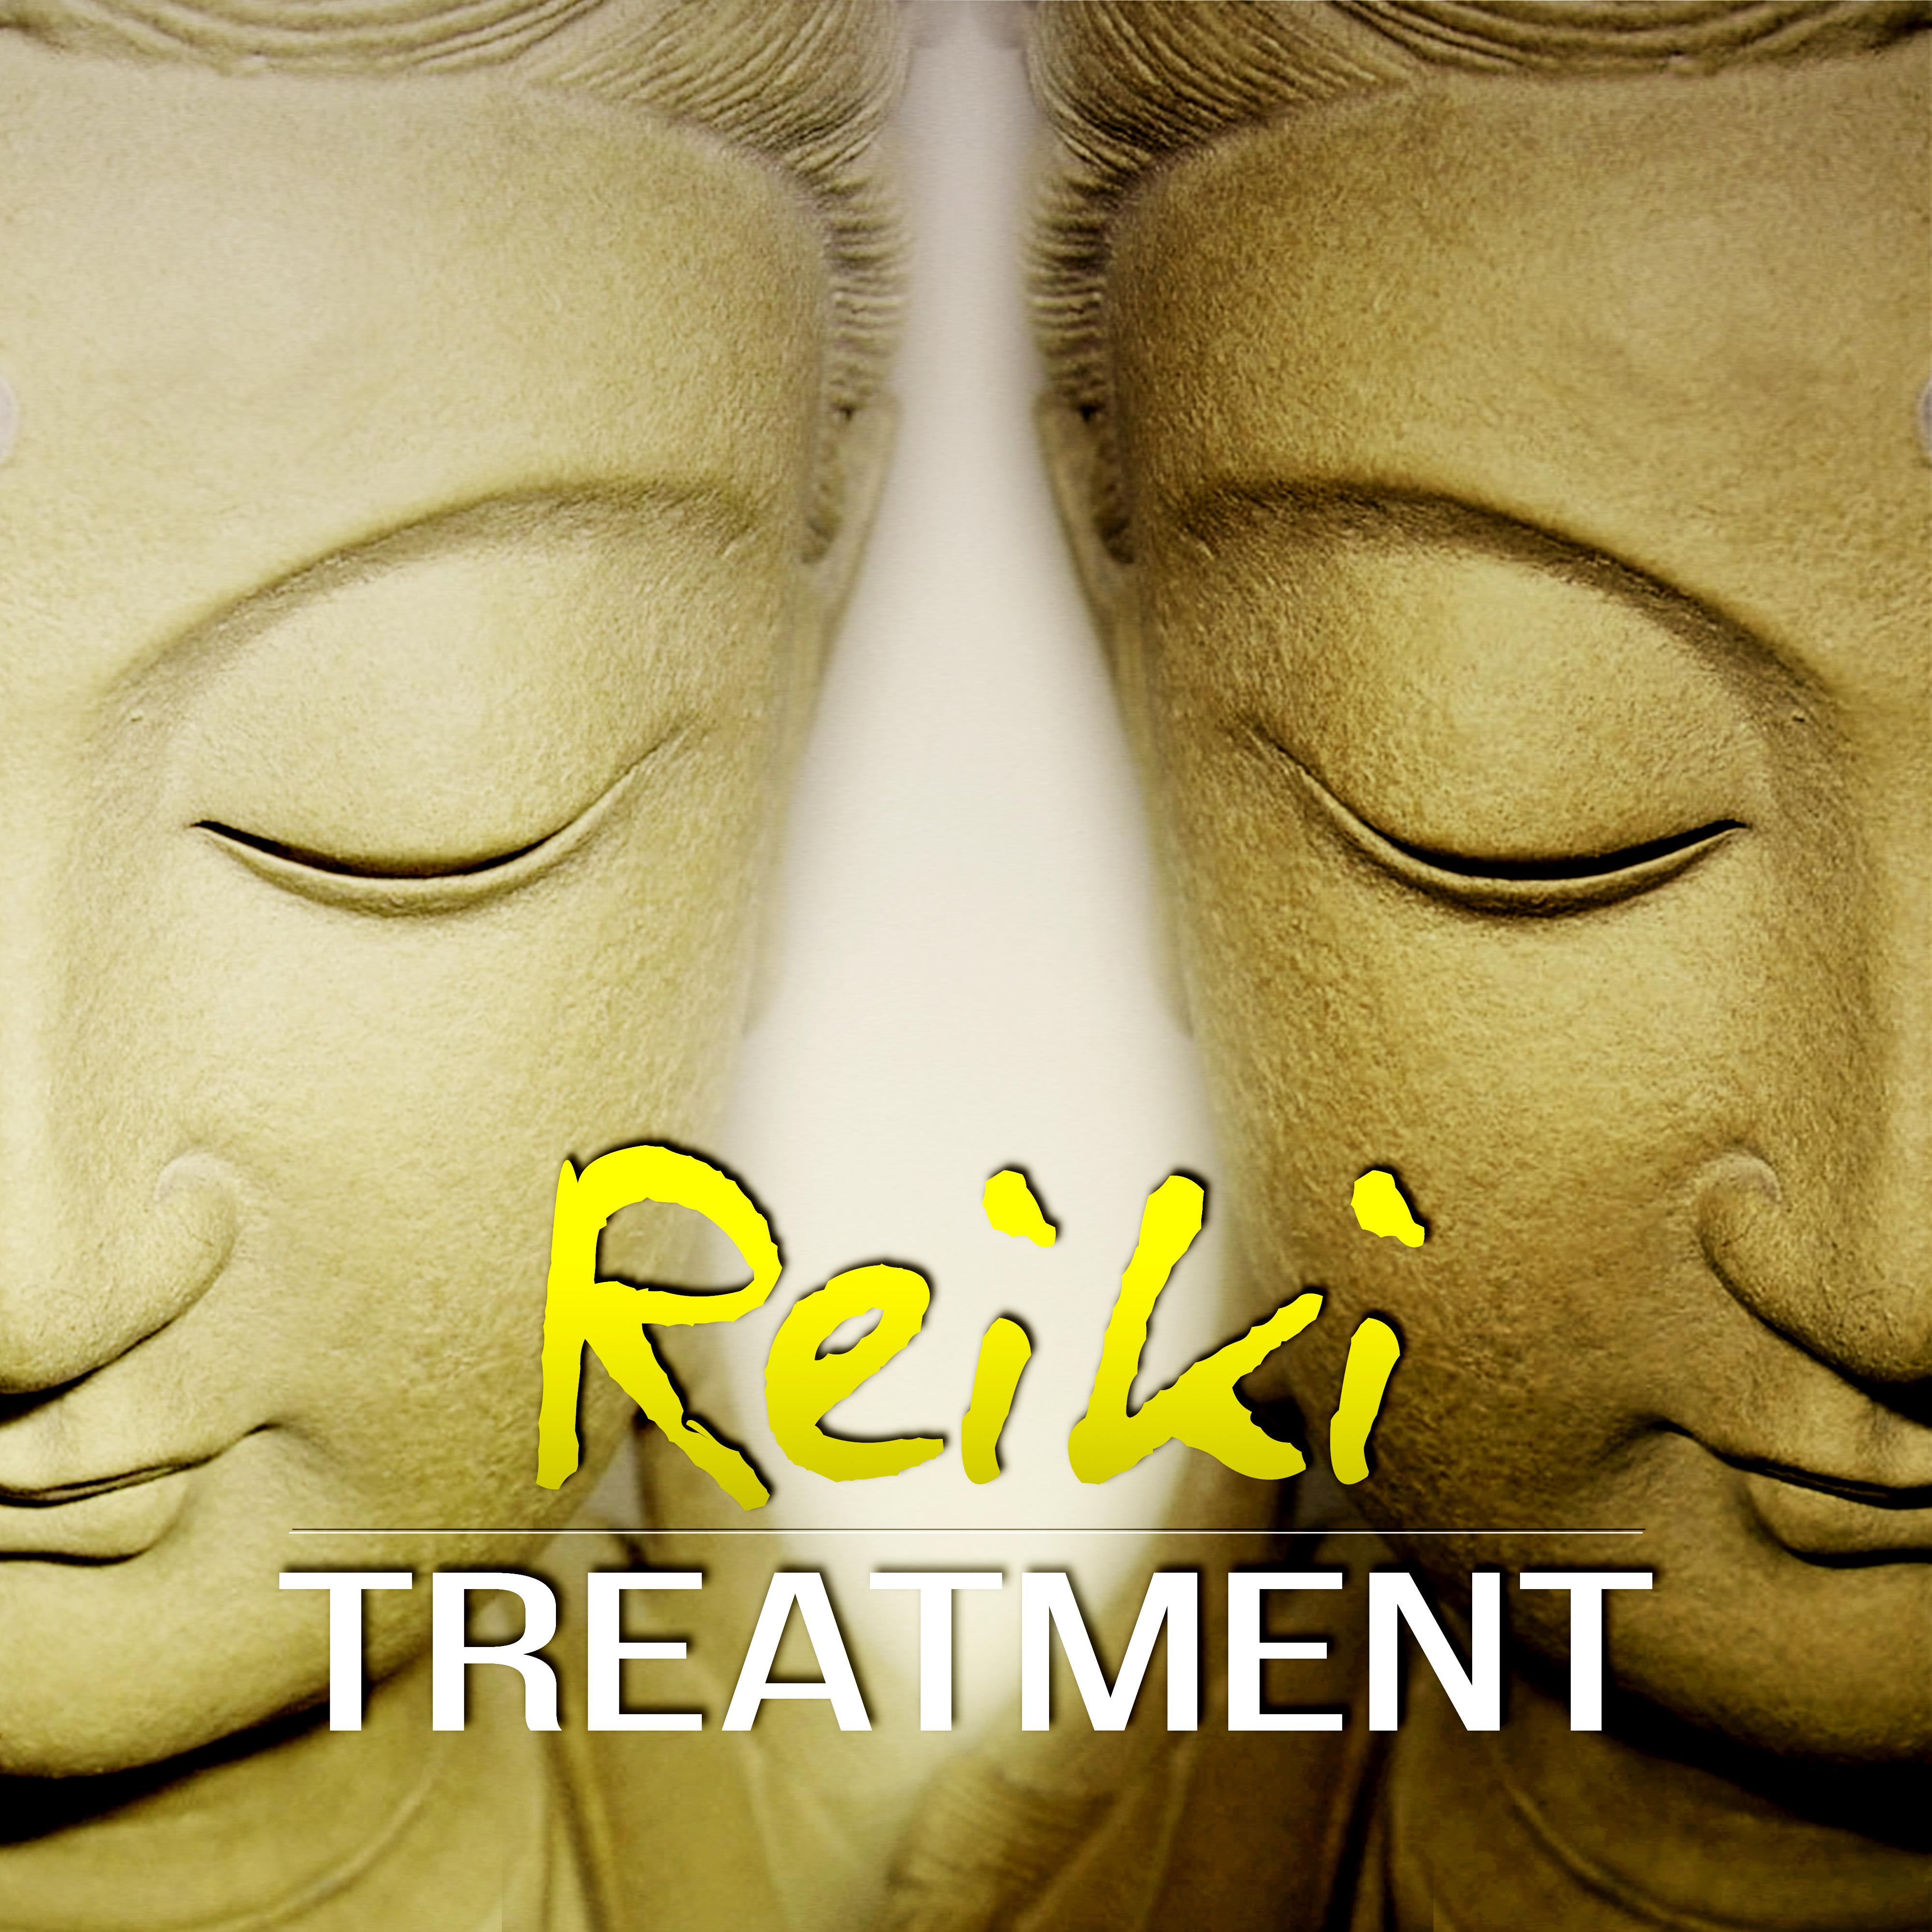 Reiki Treatment  Healing Music to Learn Reiki, Kundalini Meditation Experience, Soothing Songs for Spiritual Awakening, Astral Travel